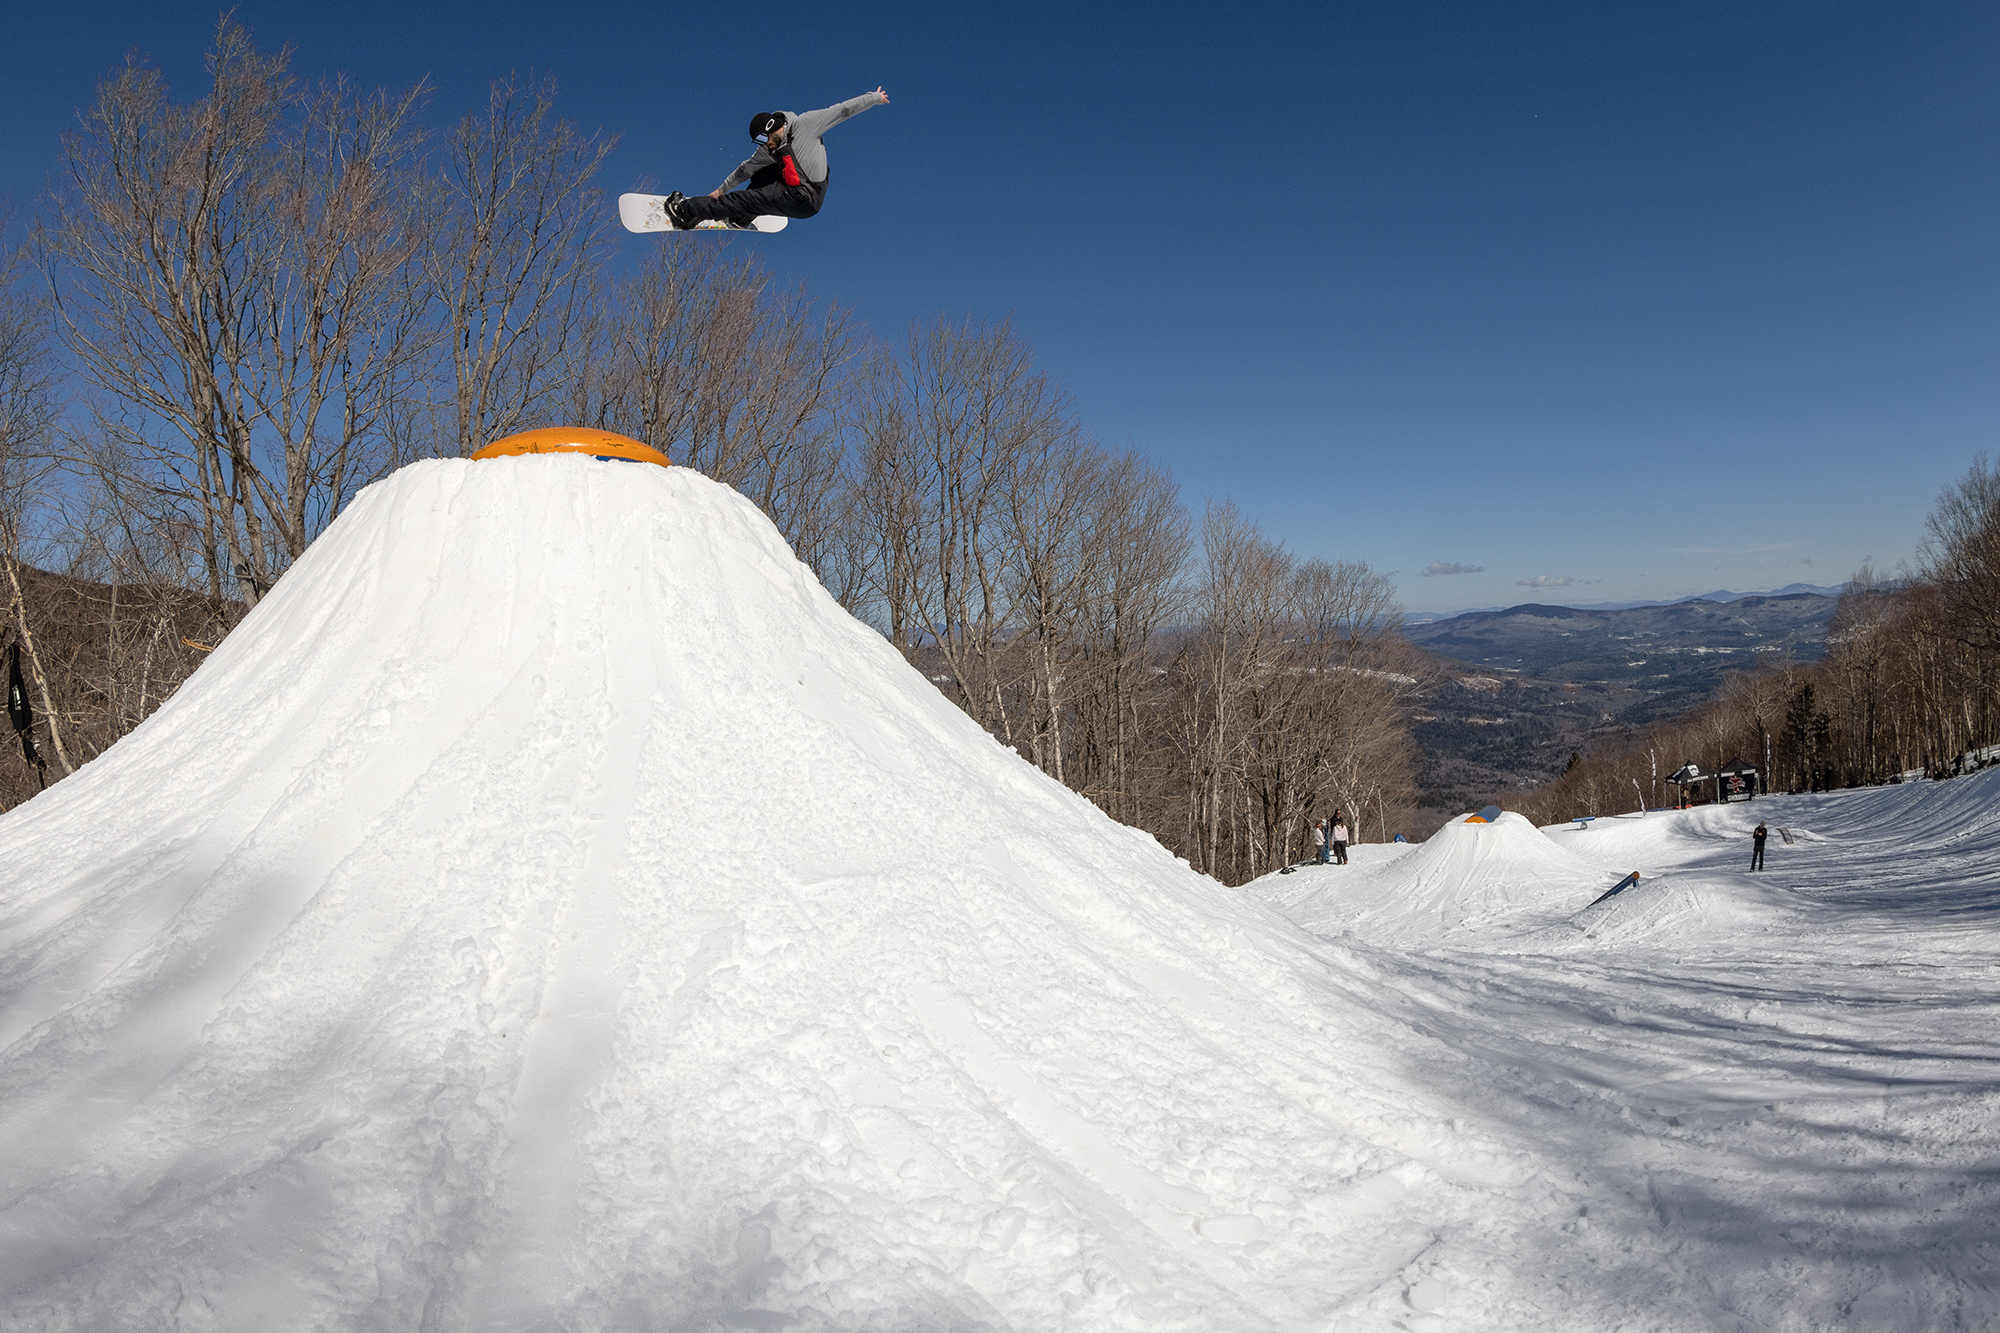 Luke Mathison snowboarding